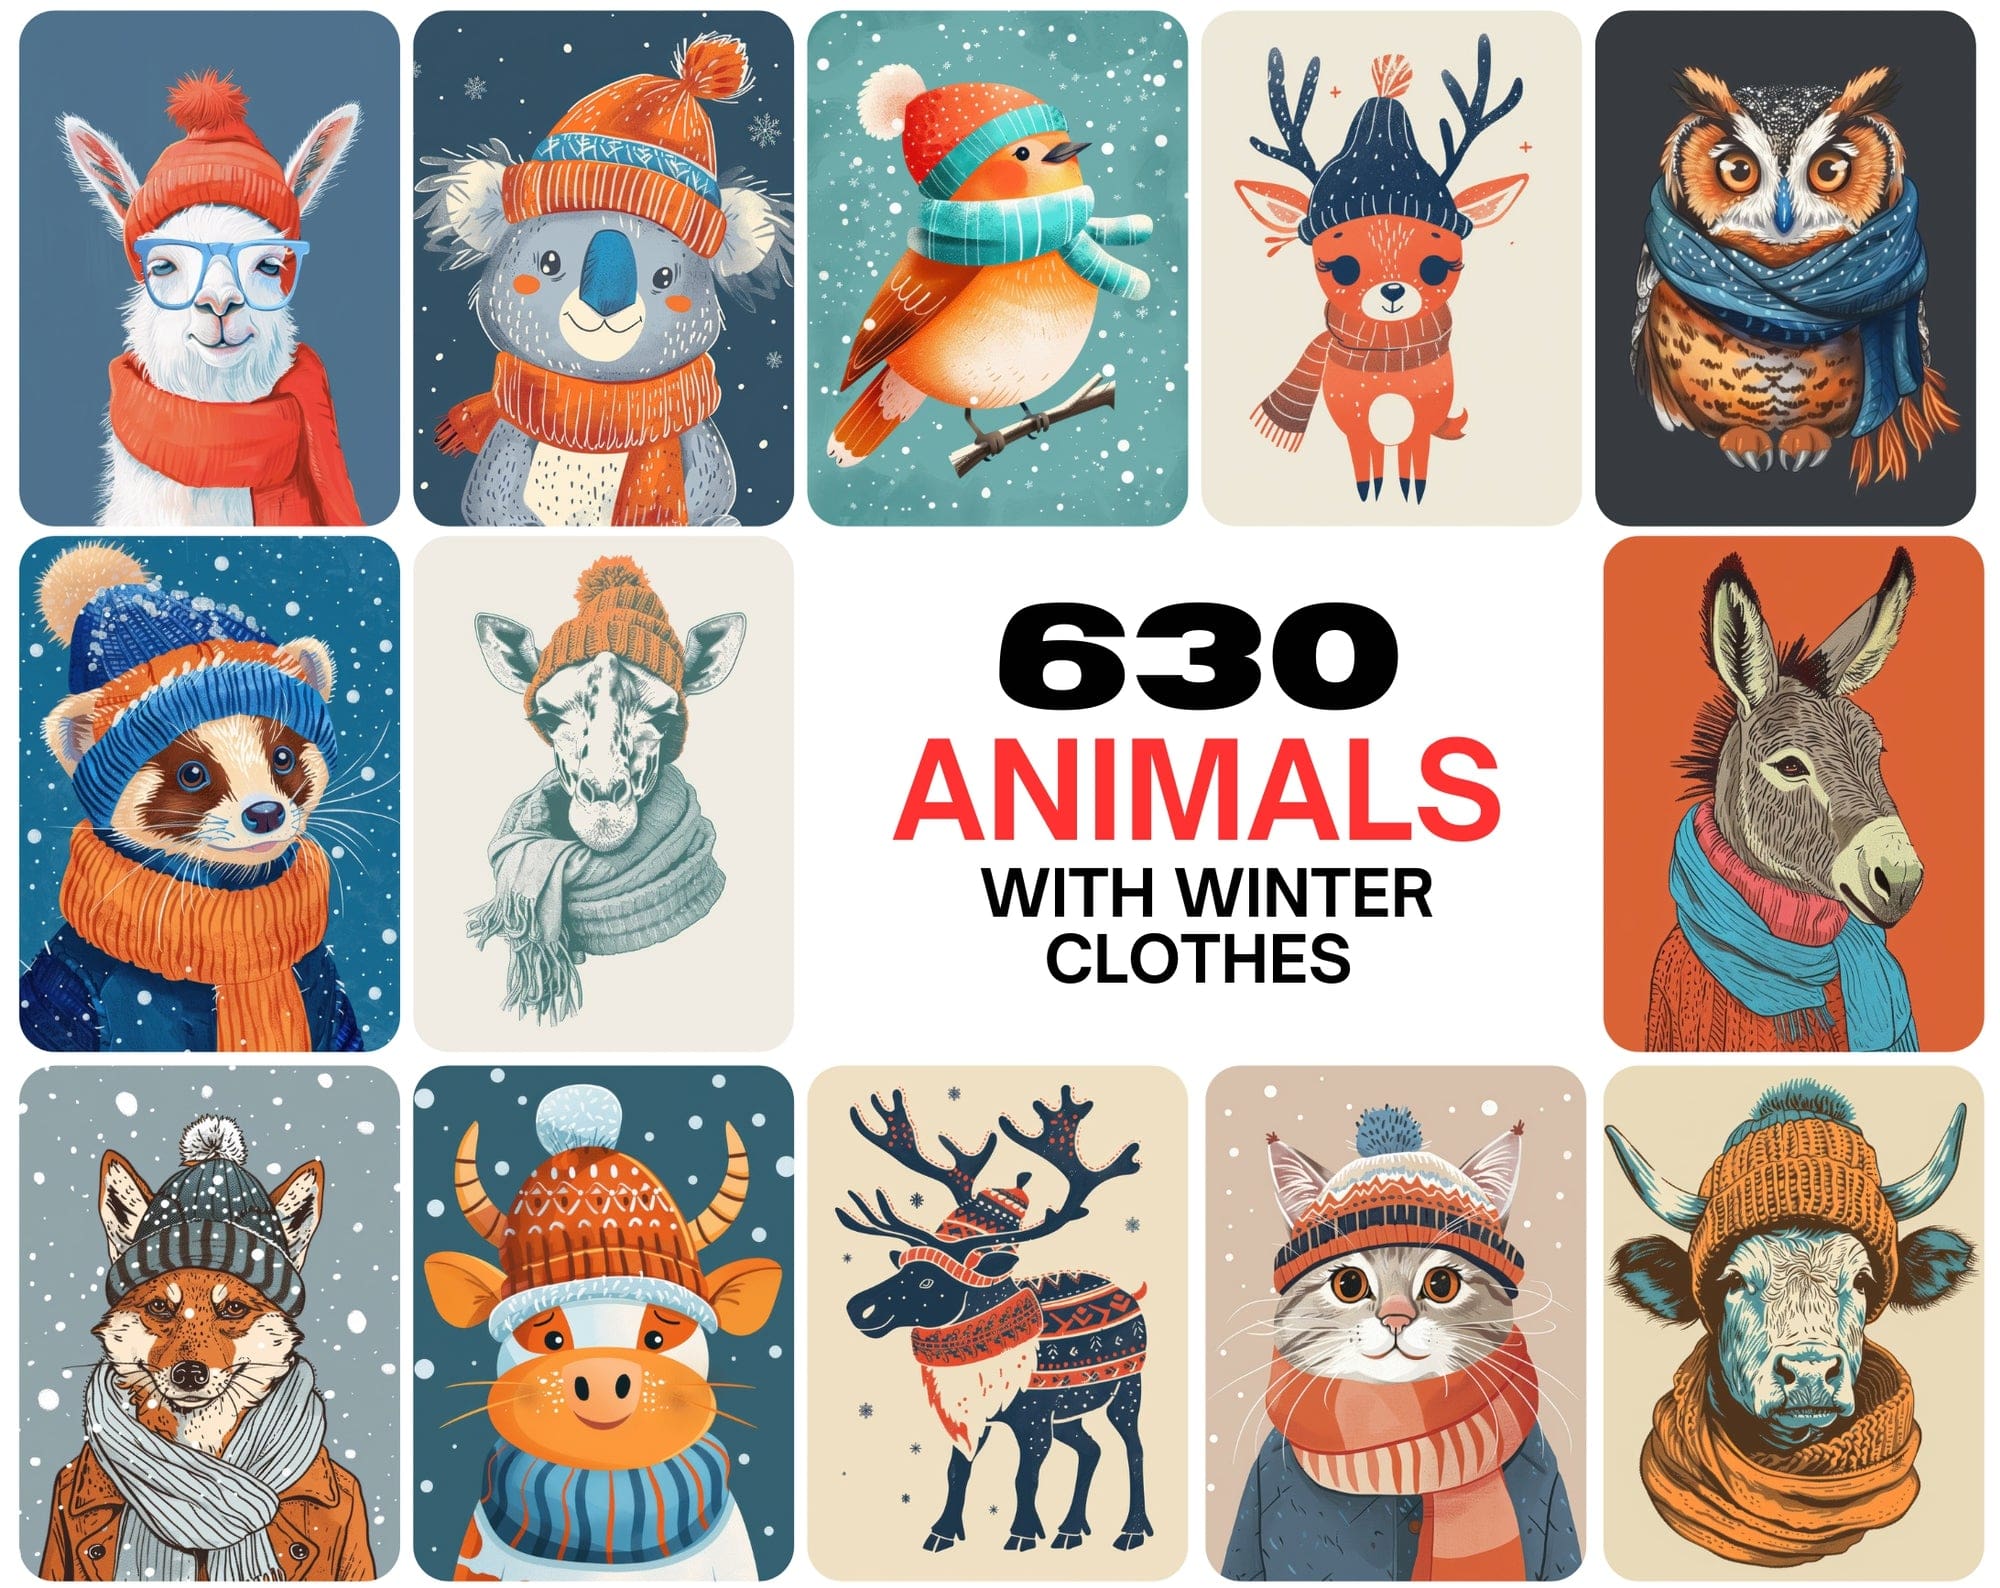 630 Adorable Animal Illustrations in Winter Clothes Digital Download Sumobundle